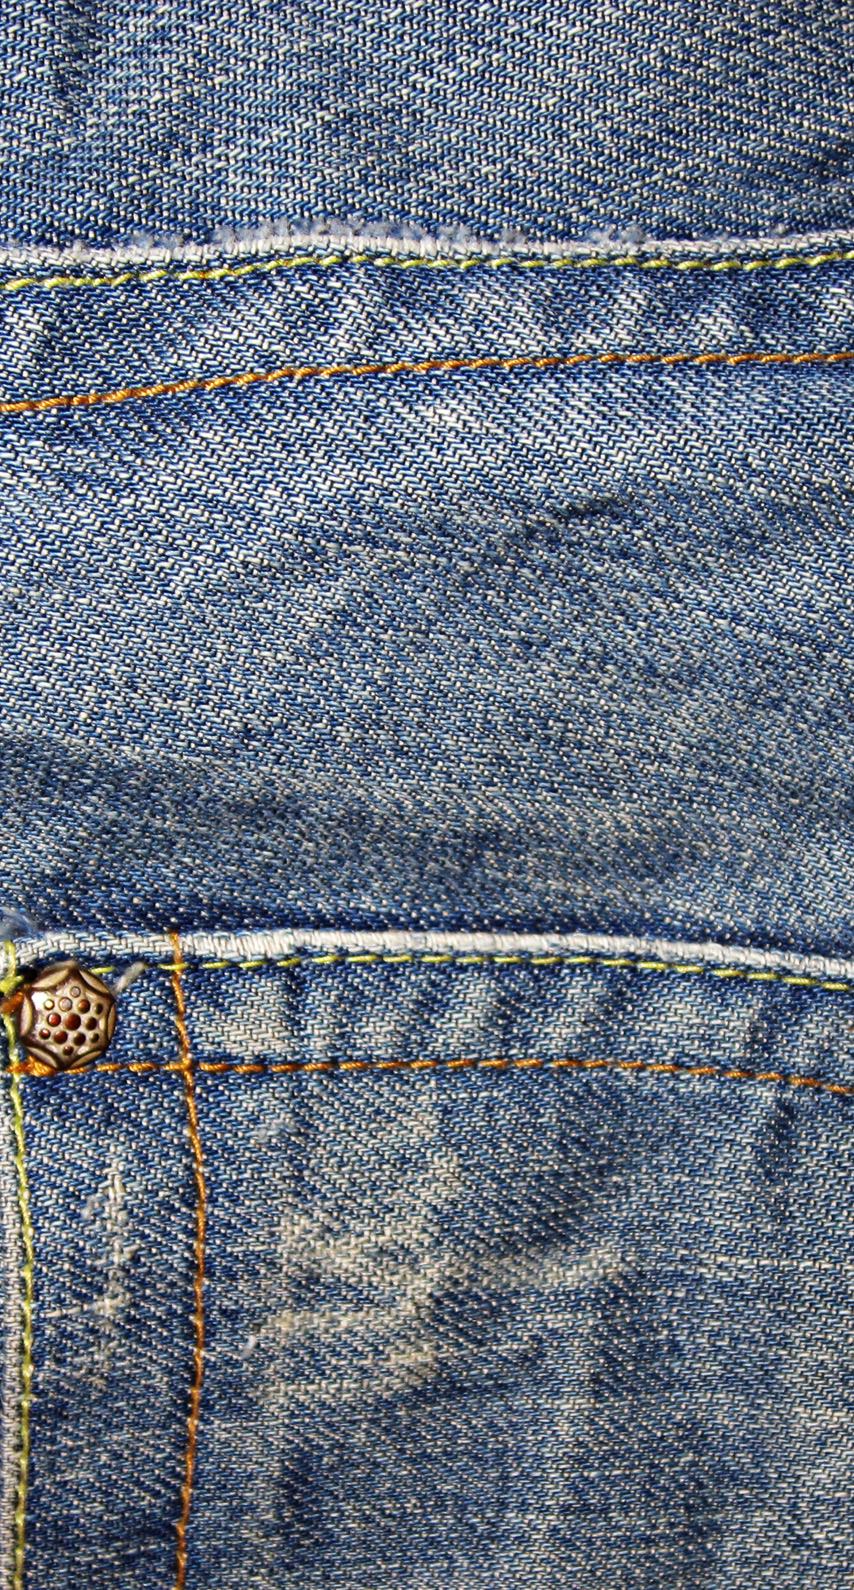 Download Denim Jeans With Metal Zipper Wallpaper | Wallpapers.com